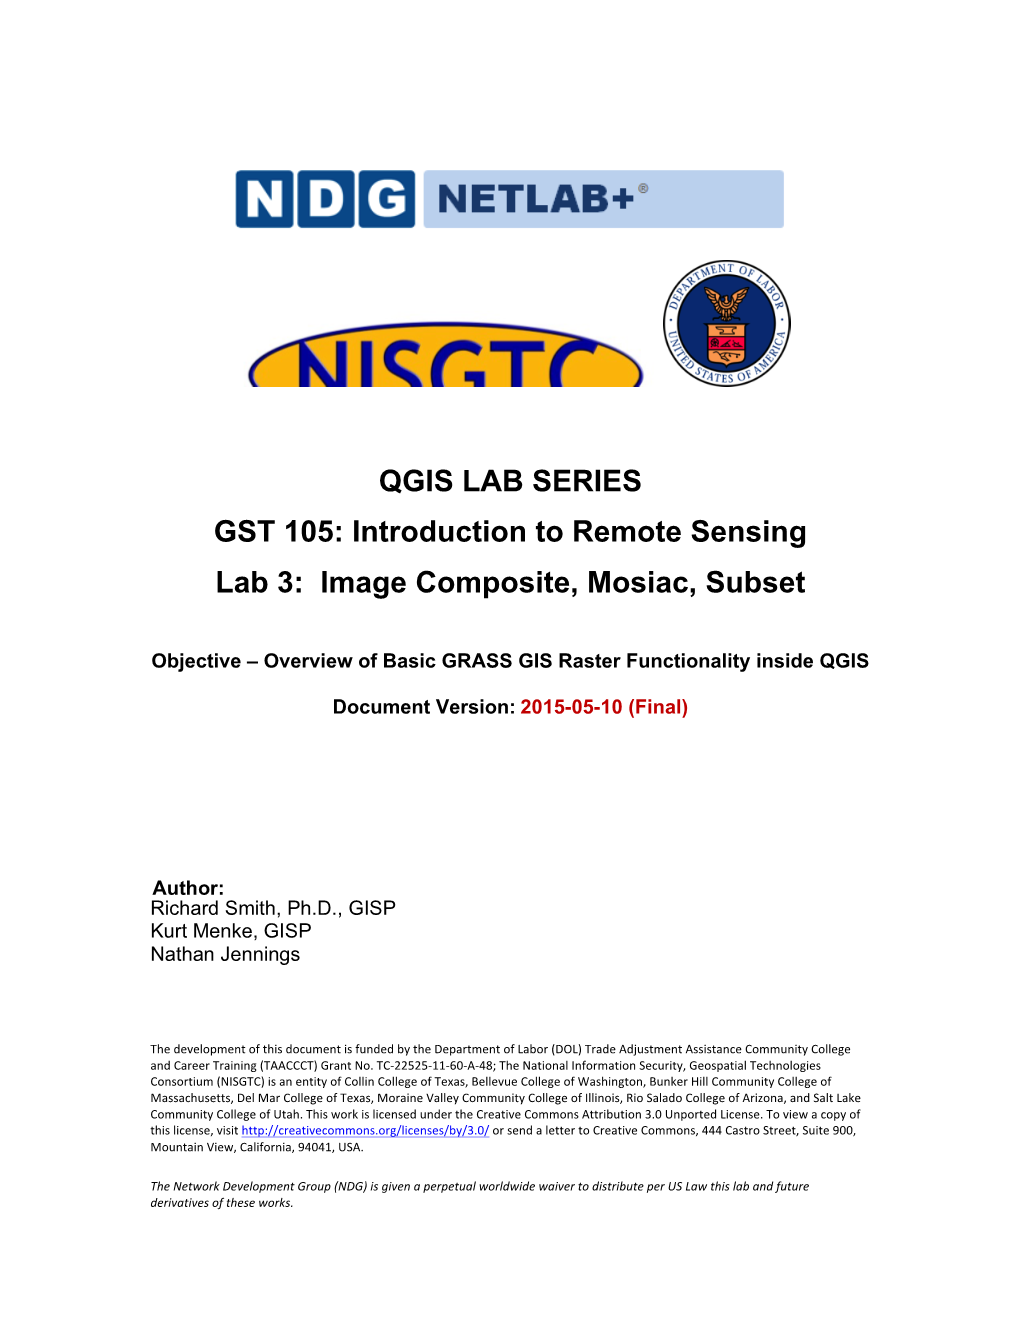 QGIS LAB SERIES GST 105: Introduction to Remote Sensing Lab 3: Image Composite, Mosiac, Subset